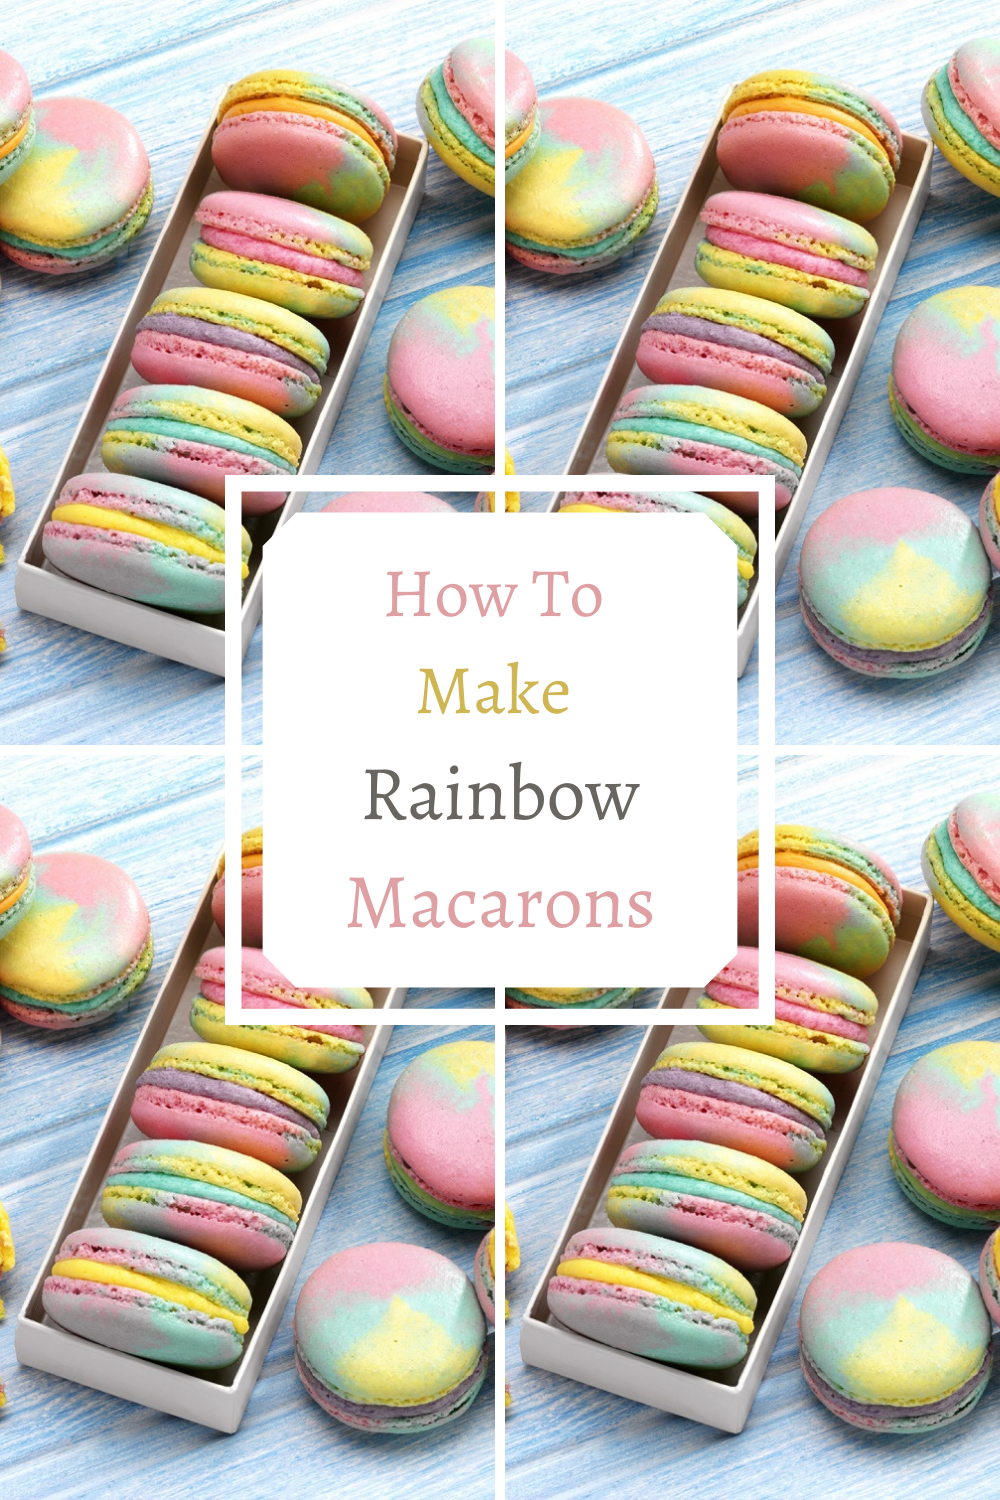 How To Make Rainbow Macarons: